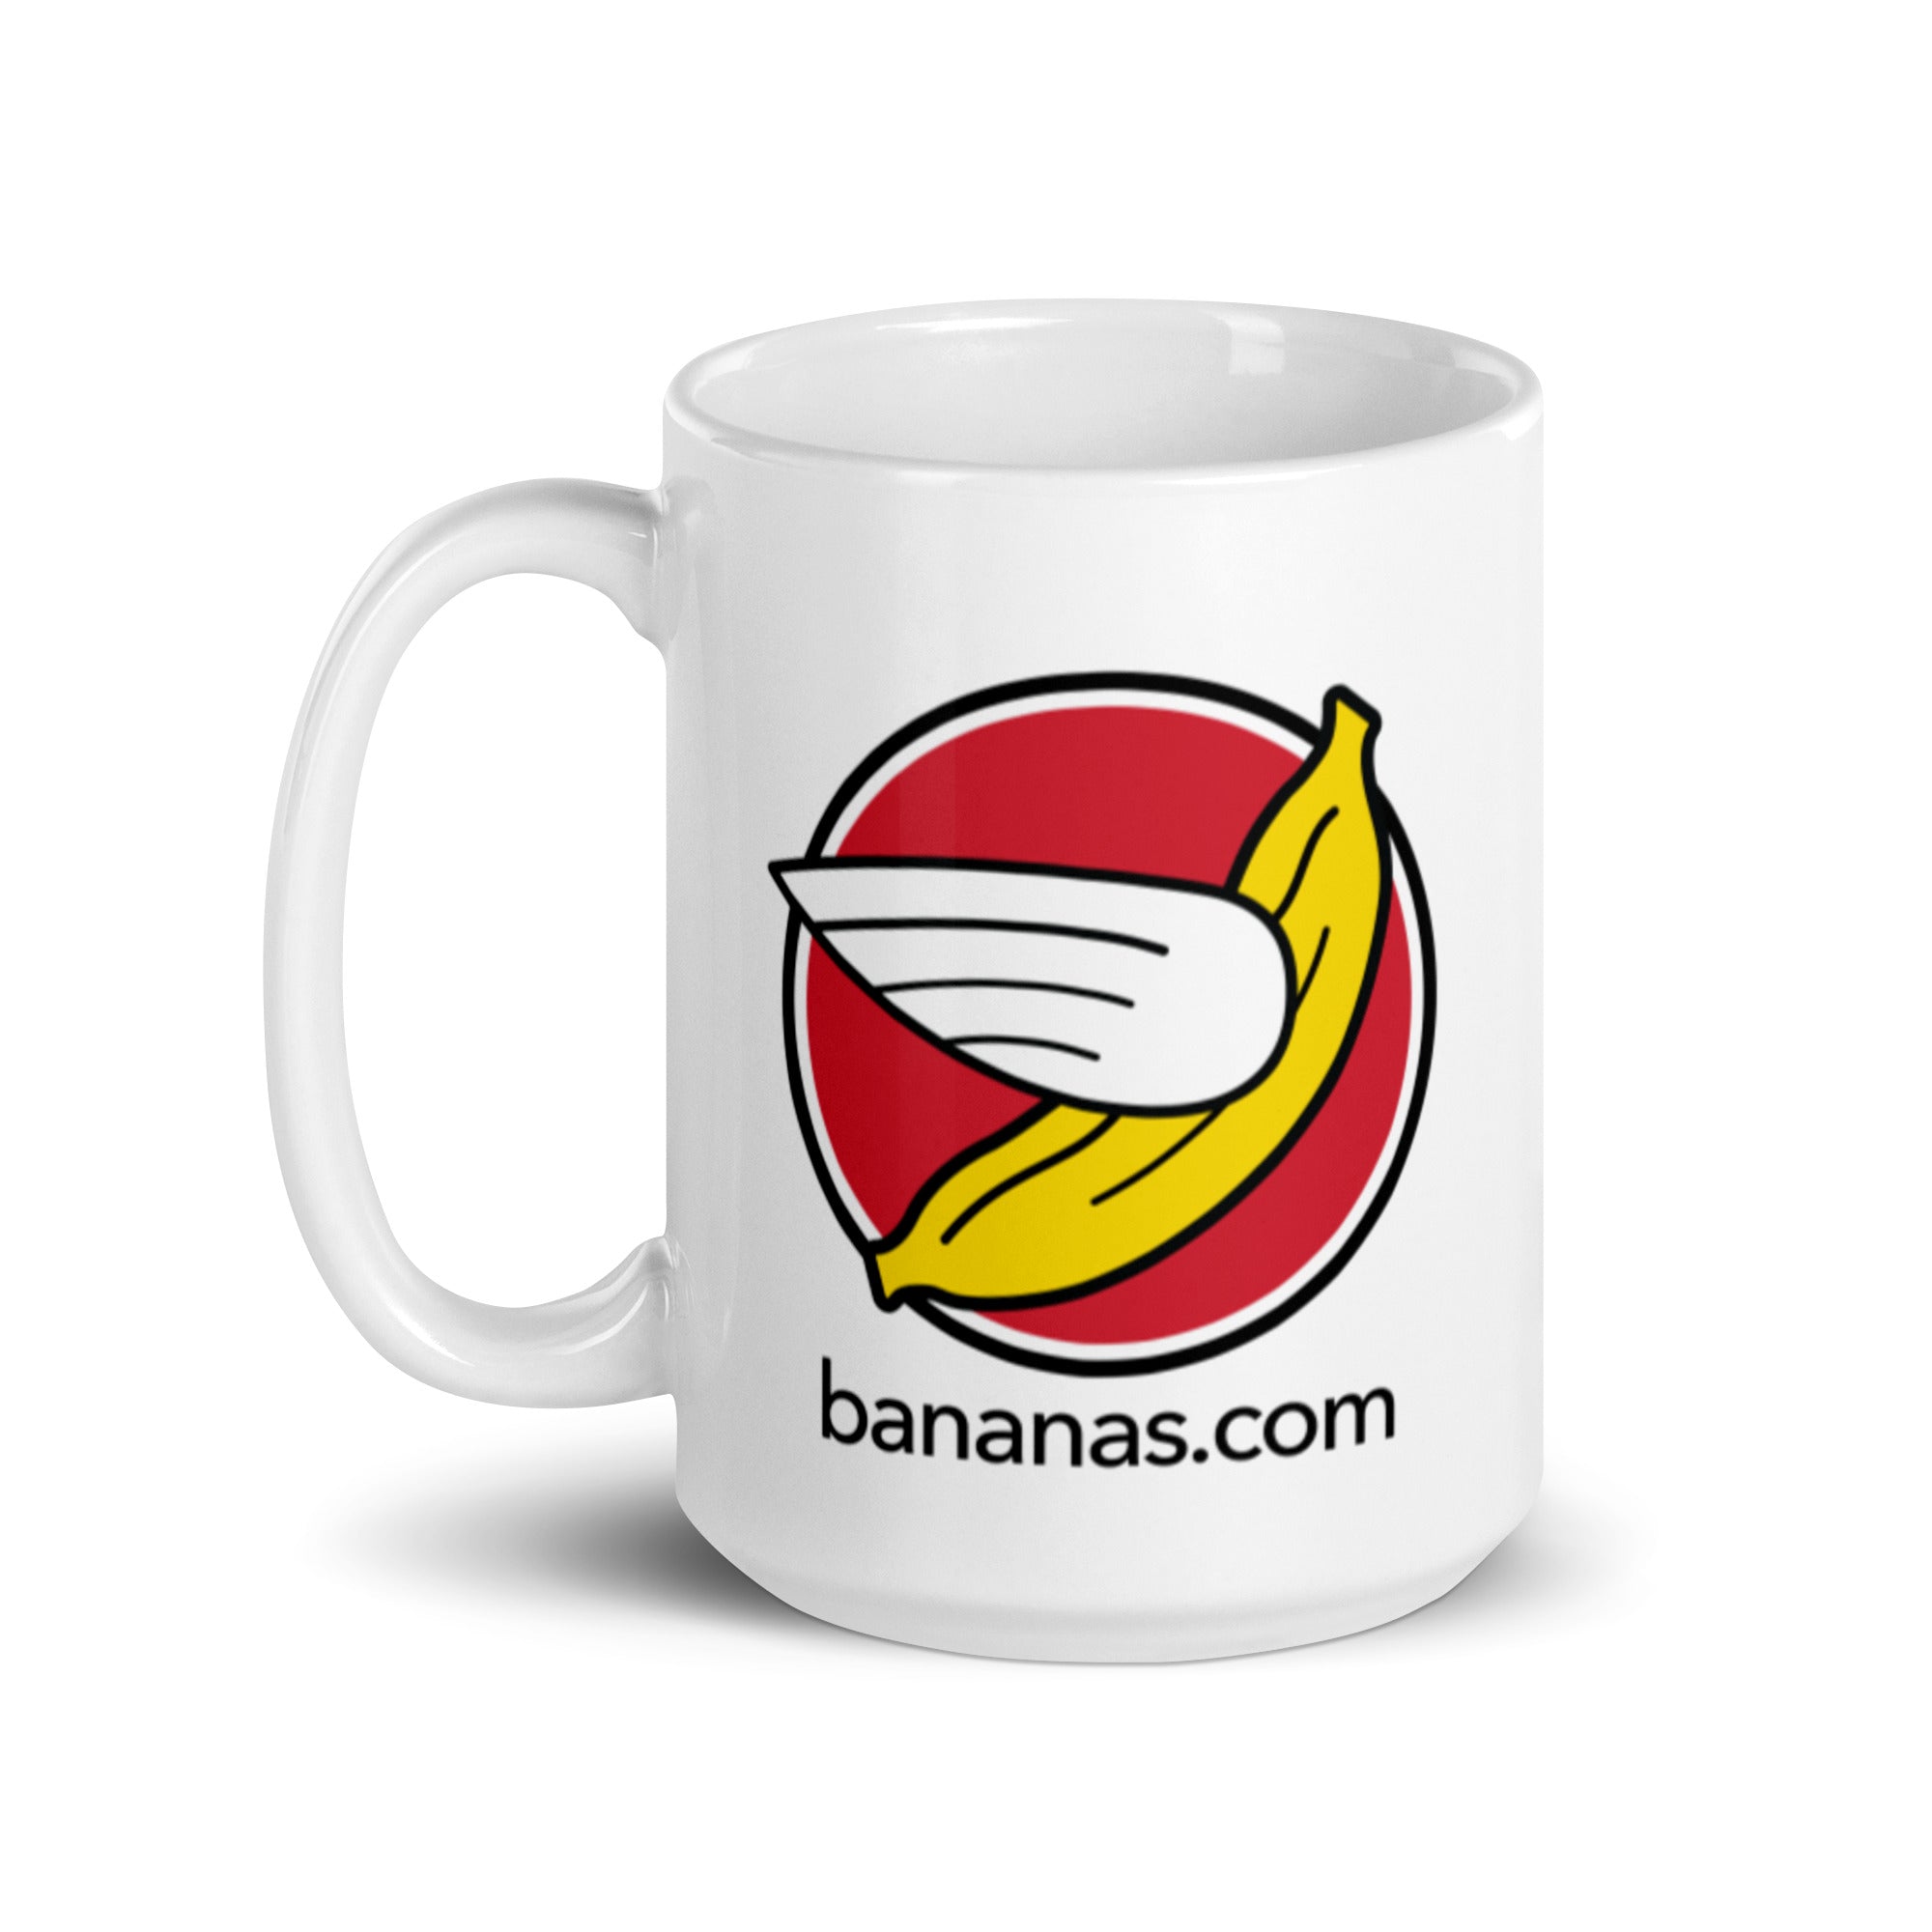 Bananas at Large® White Glossy Mug, Icon Logo